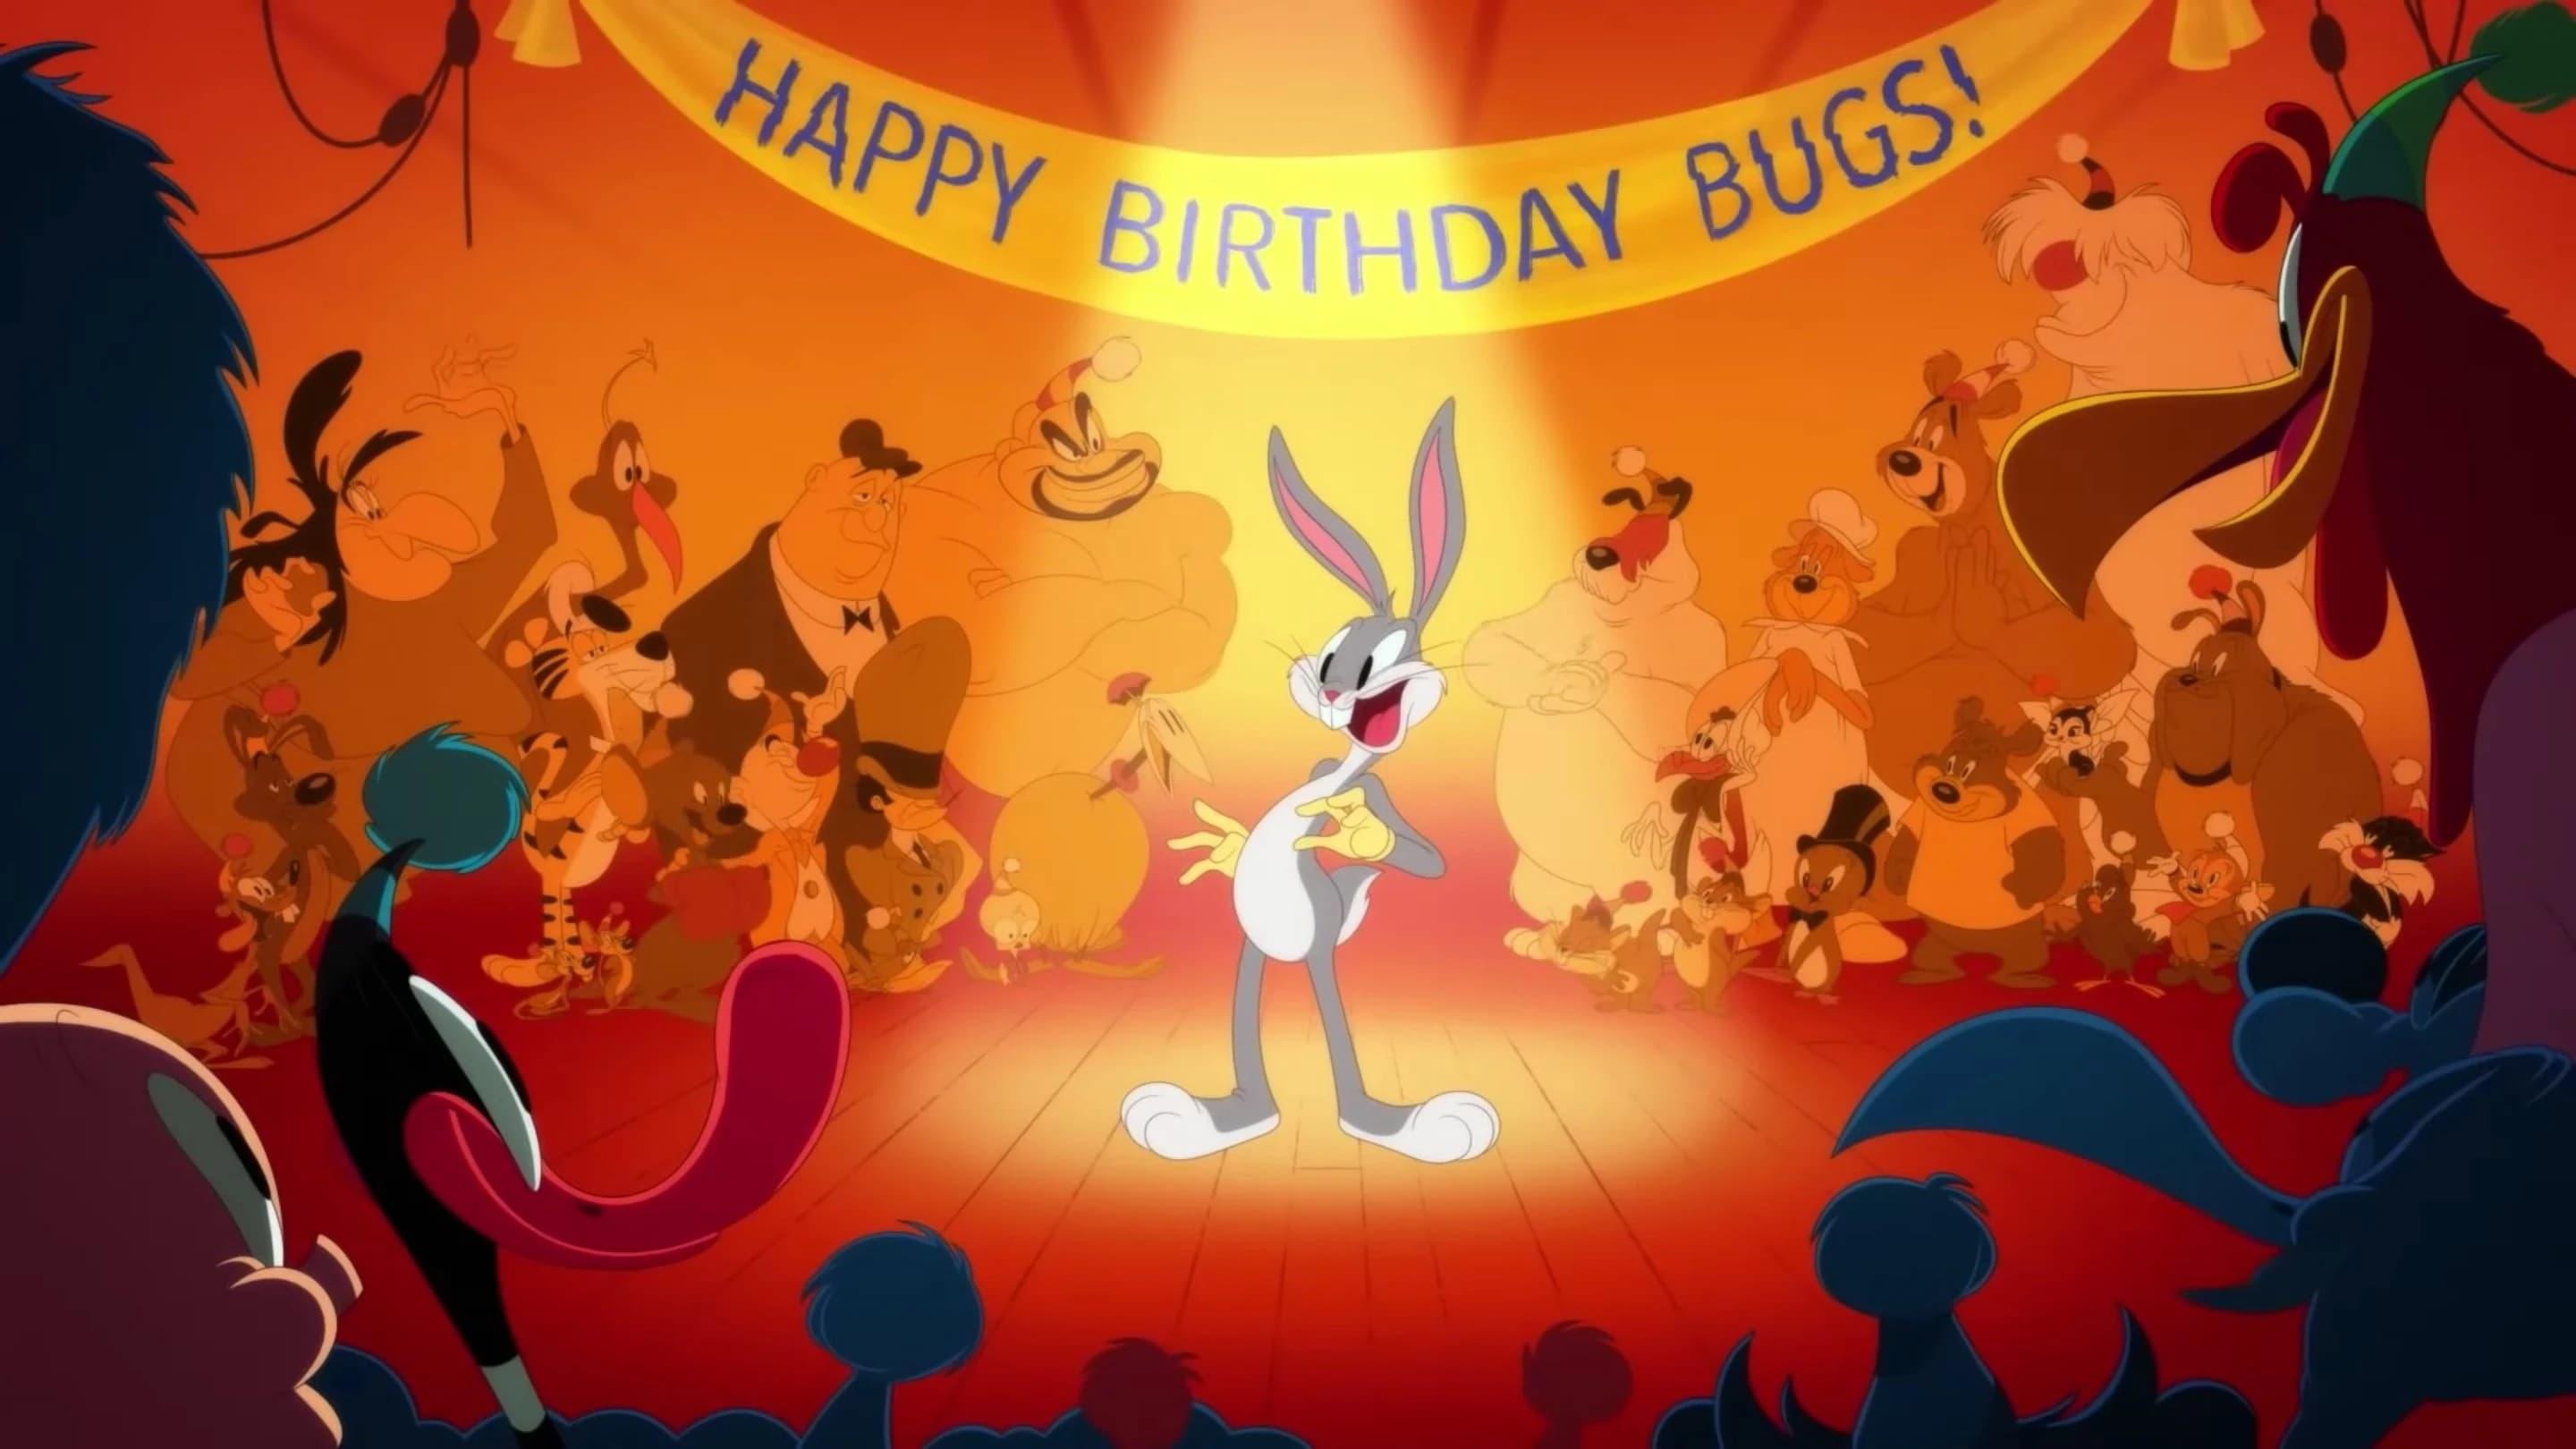 Happy Birthday Bugs Bunny! backdrop